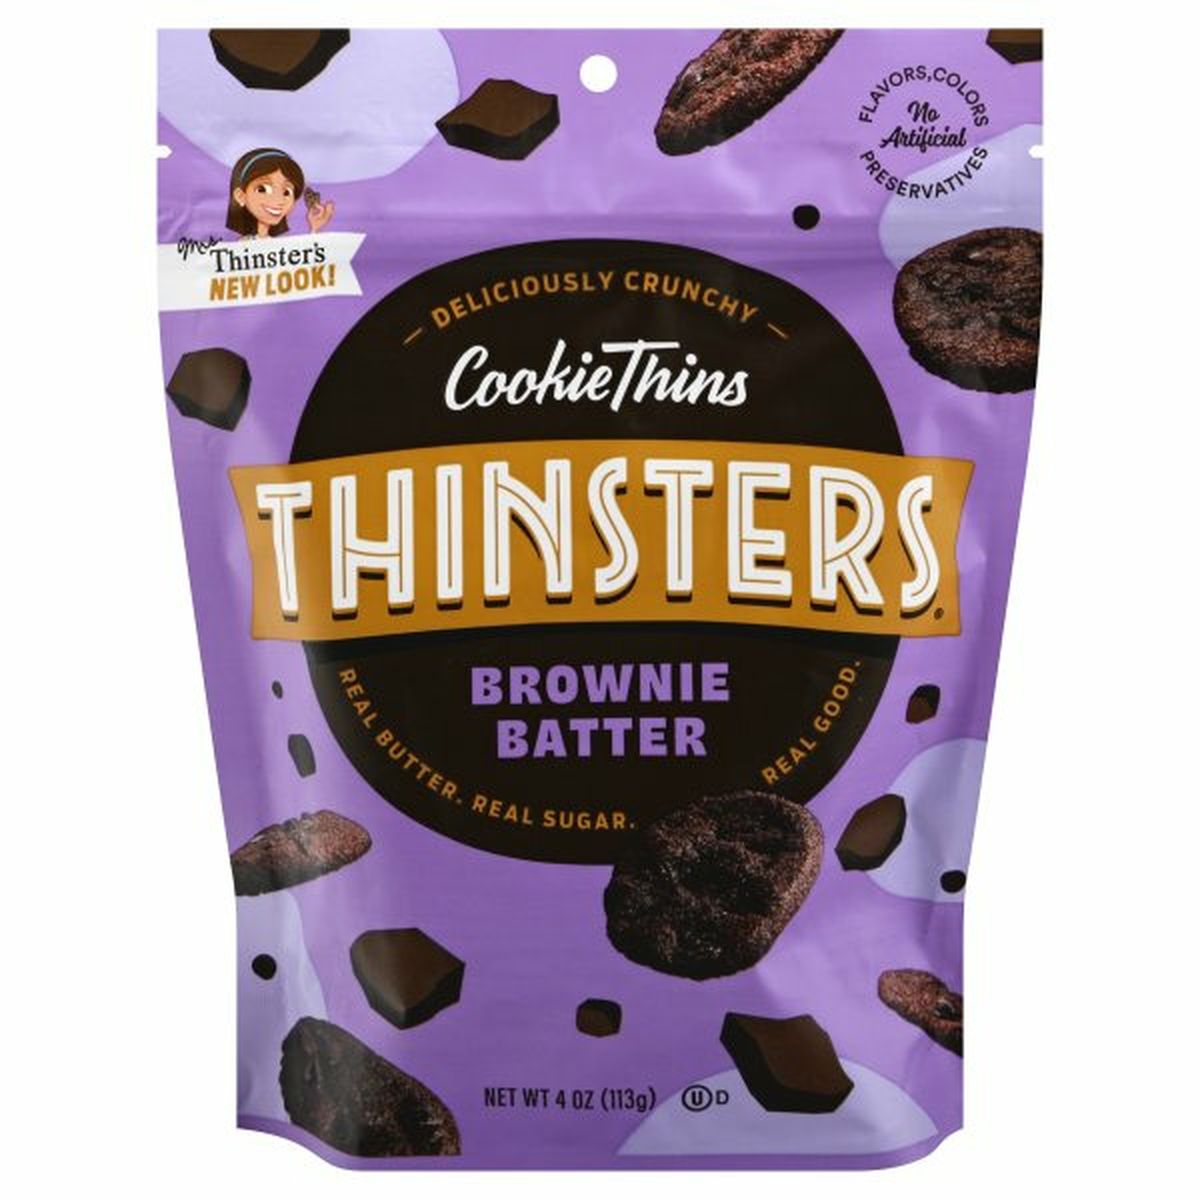 Calories in Thinsters Cookie Thins, Brownie Batter